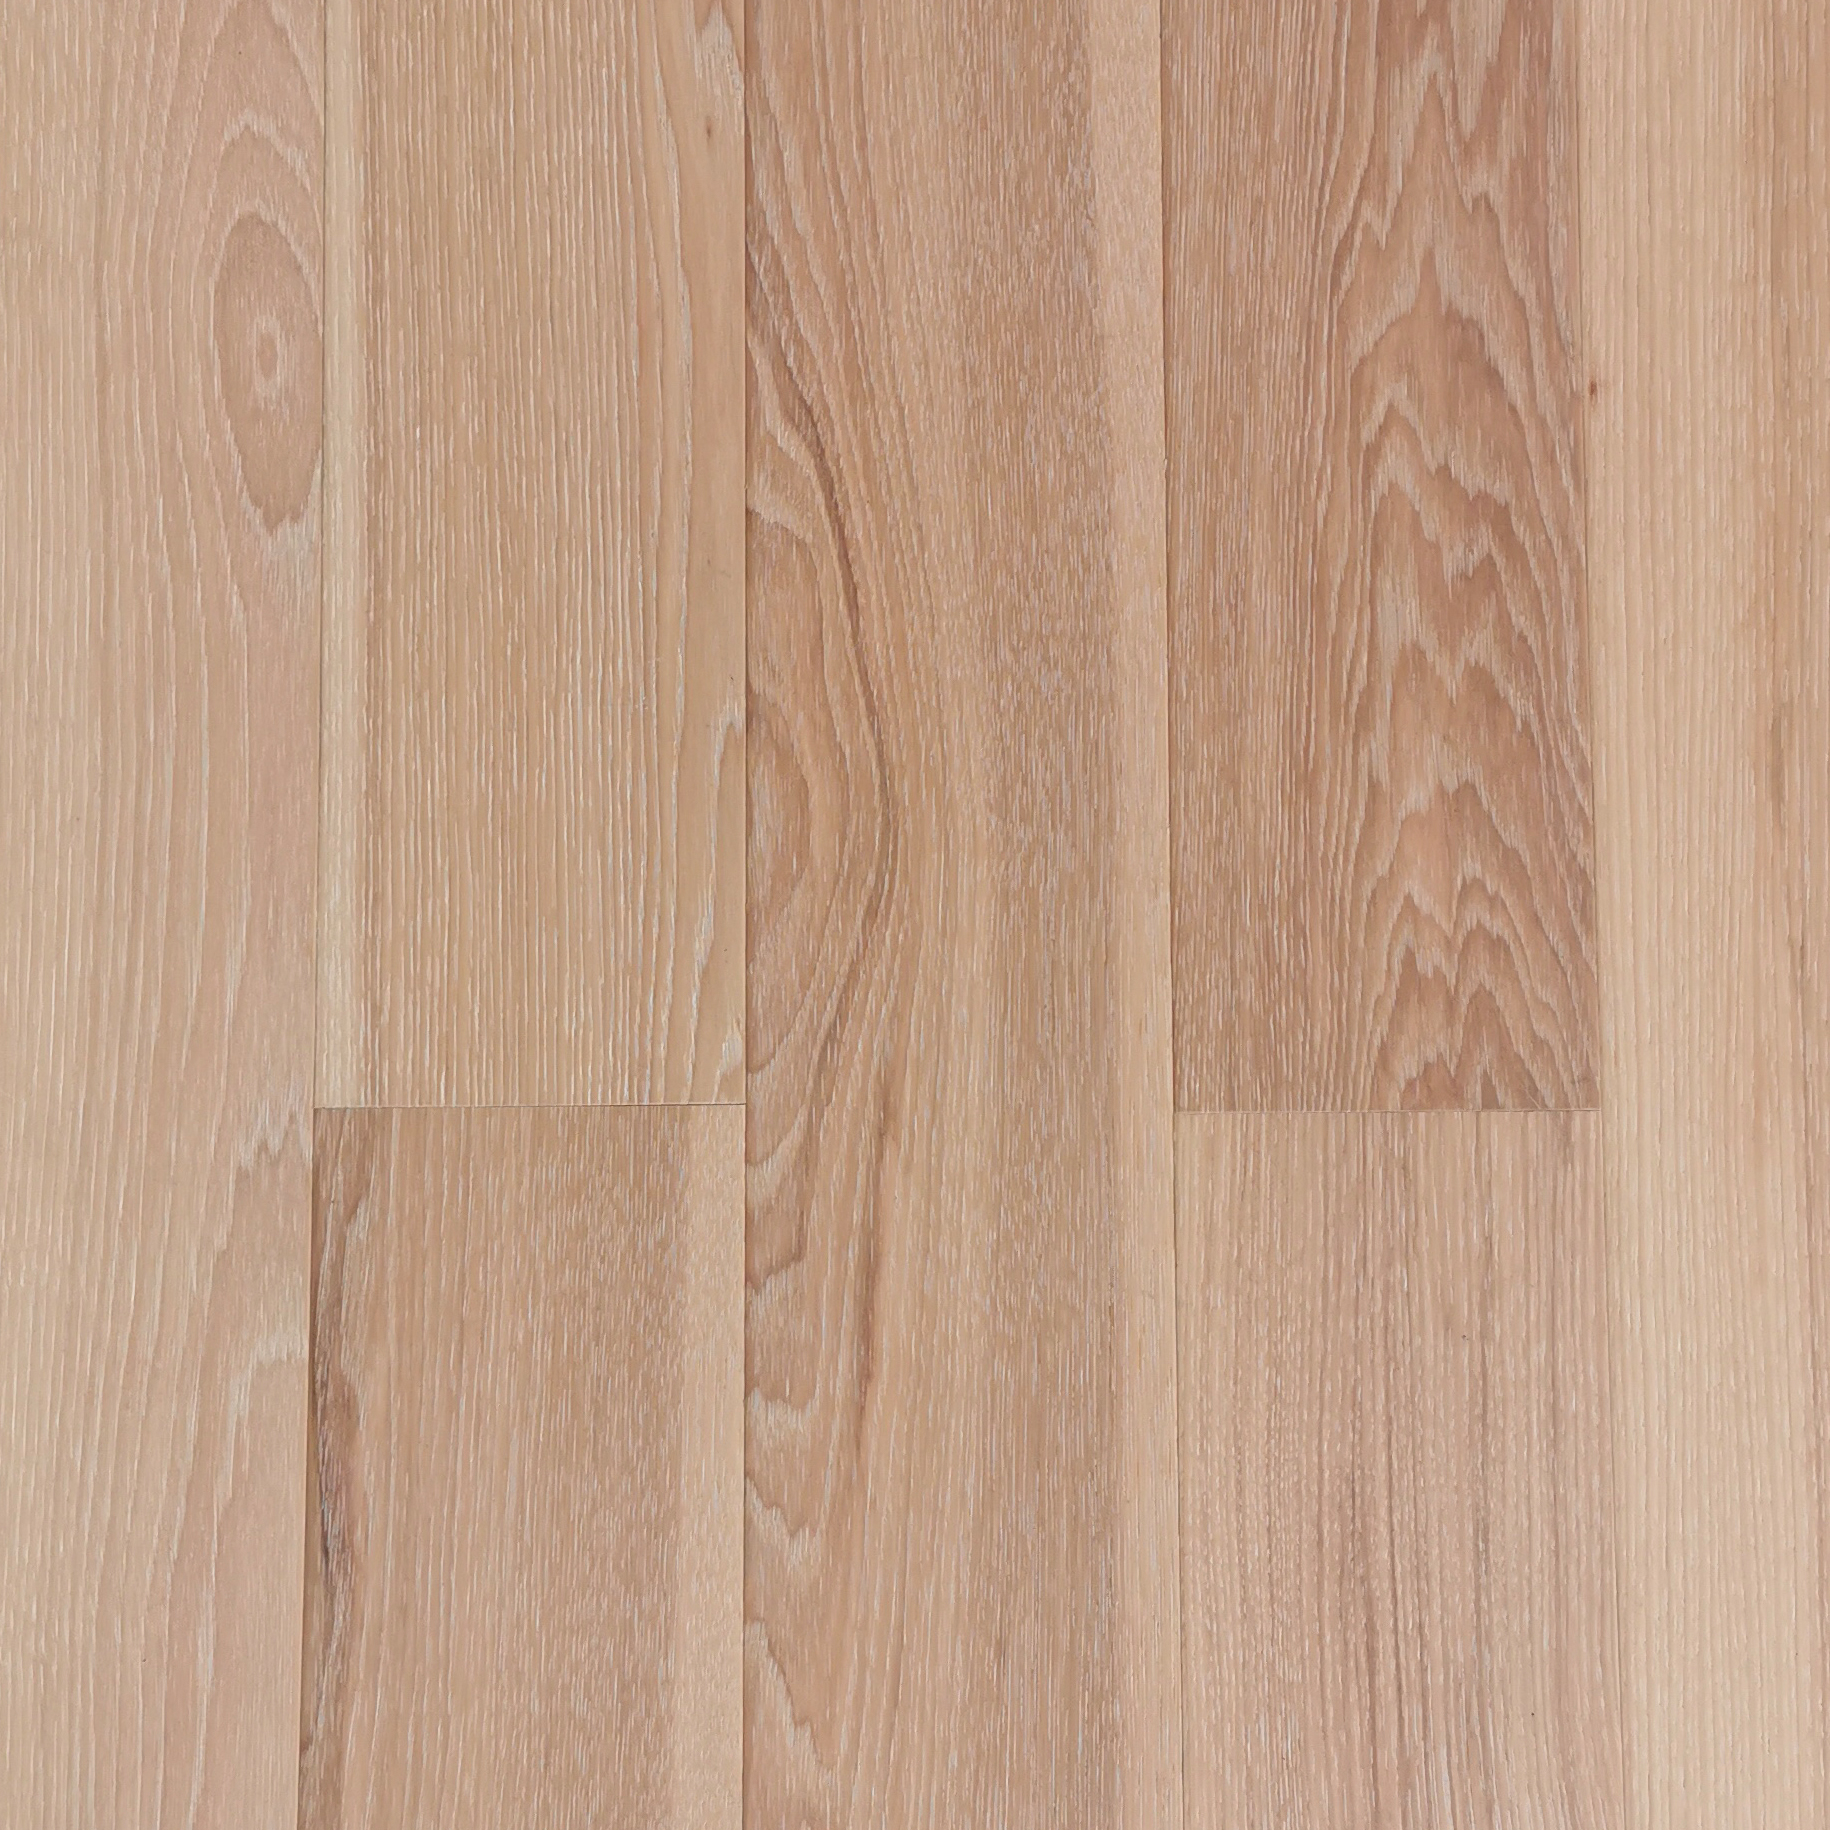 ABC Grade Natural Oak Veneer Wood SPC Flooring